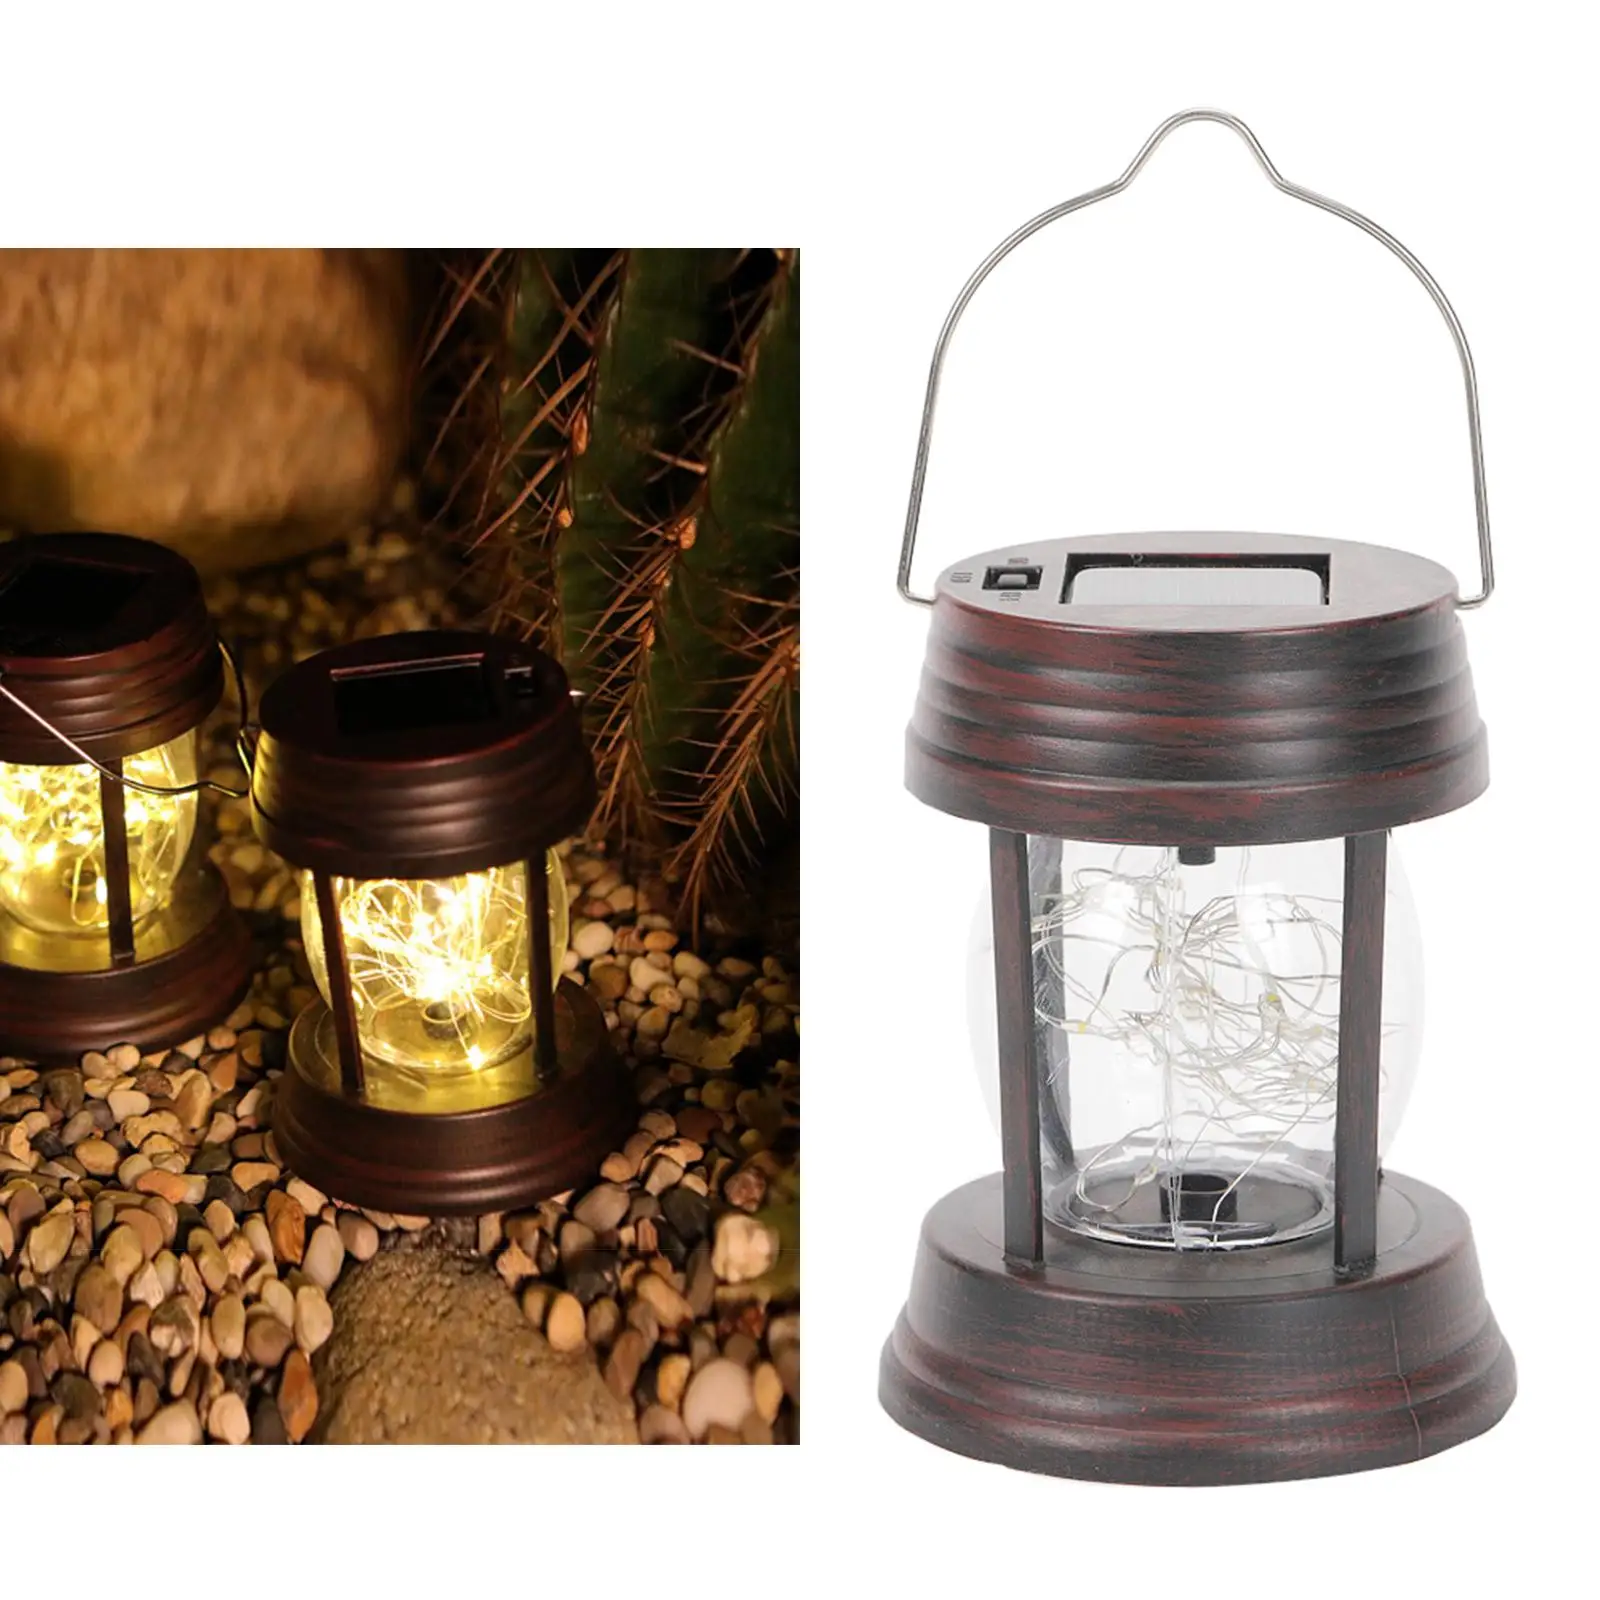 Retro Garden Solar Lantern Light Dusk to Dawn Super Bright Waterproof LED Lamp for Lawn Walkway Path Outdoor, Camping Lantern